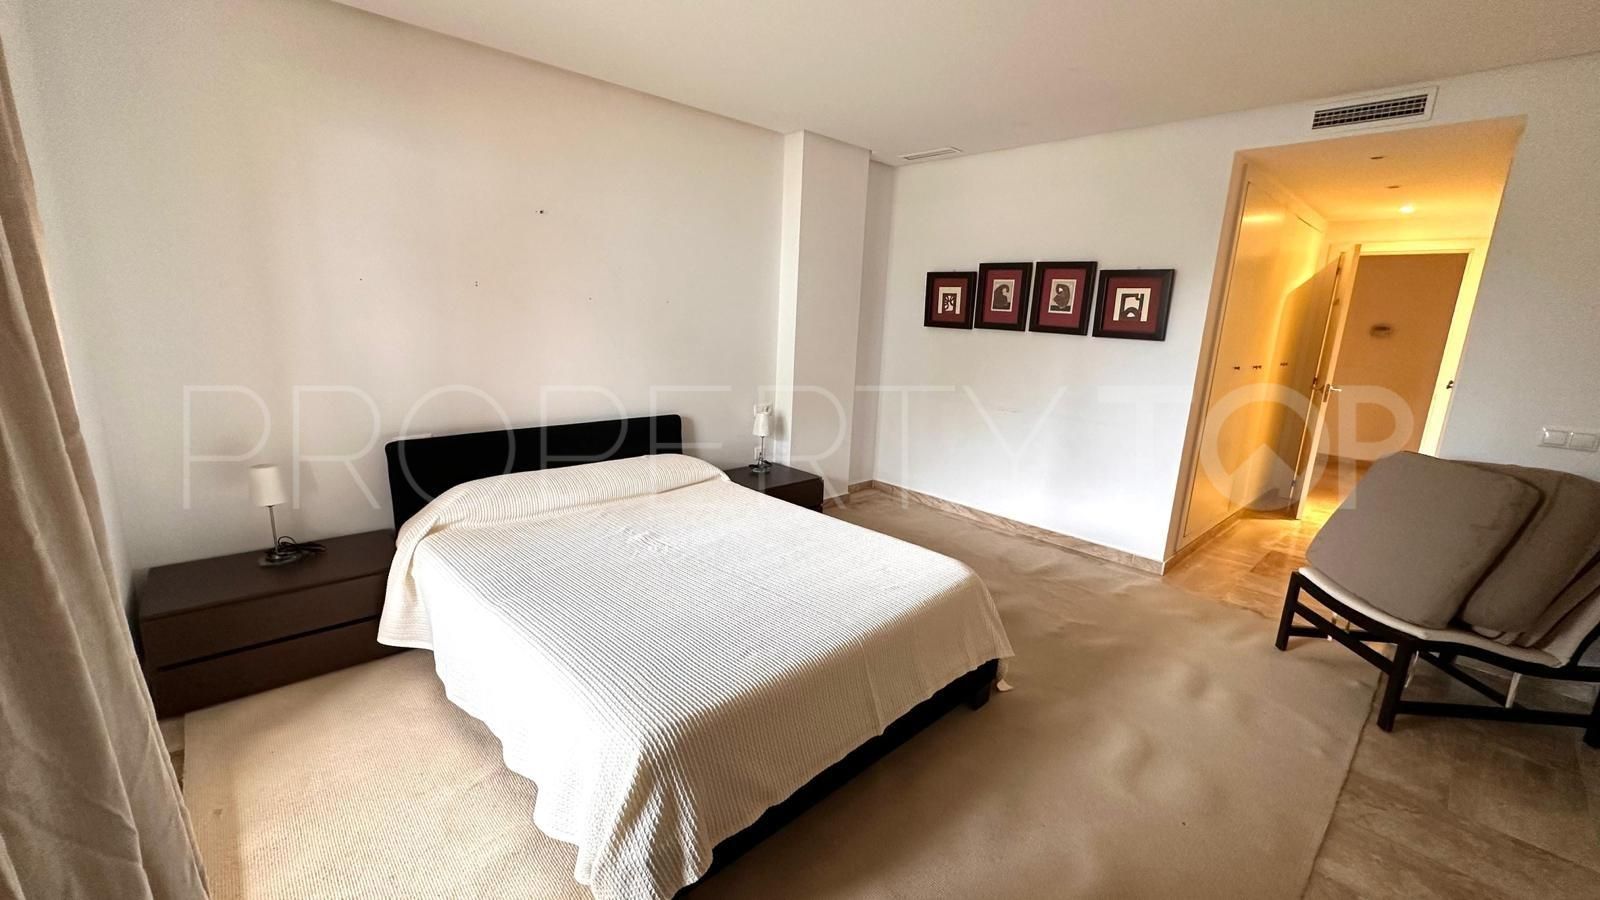 1 bedroom Sotogrande apartment for sale